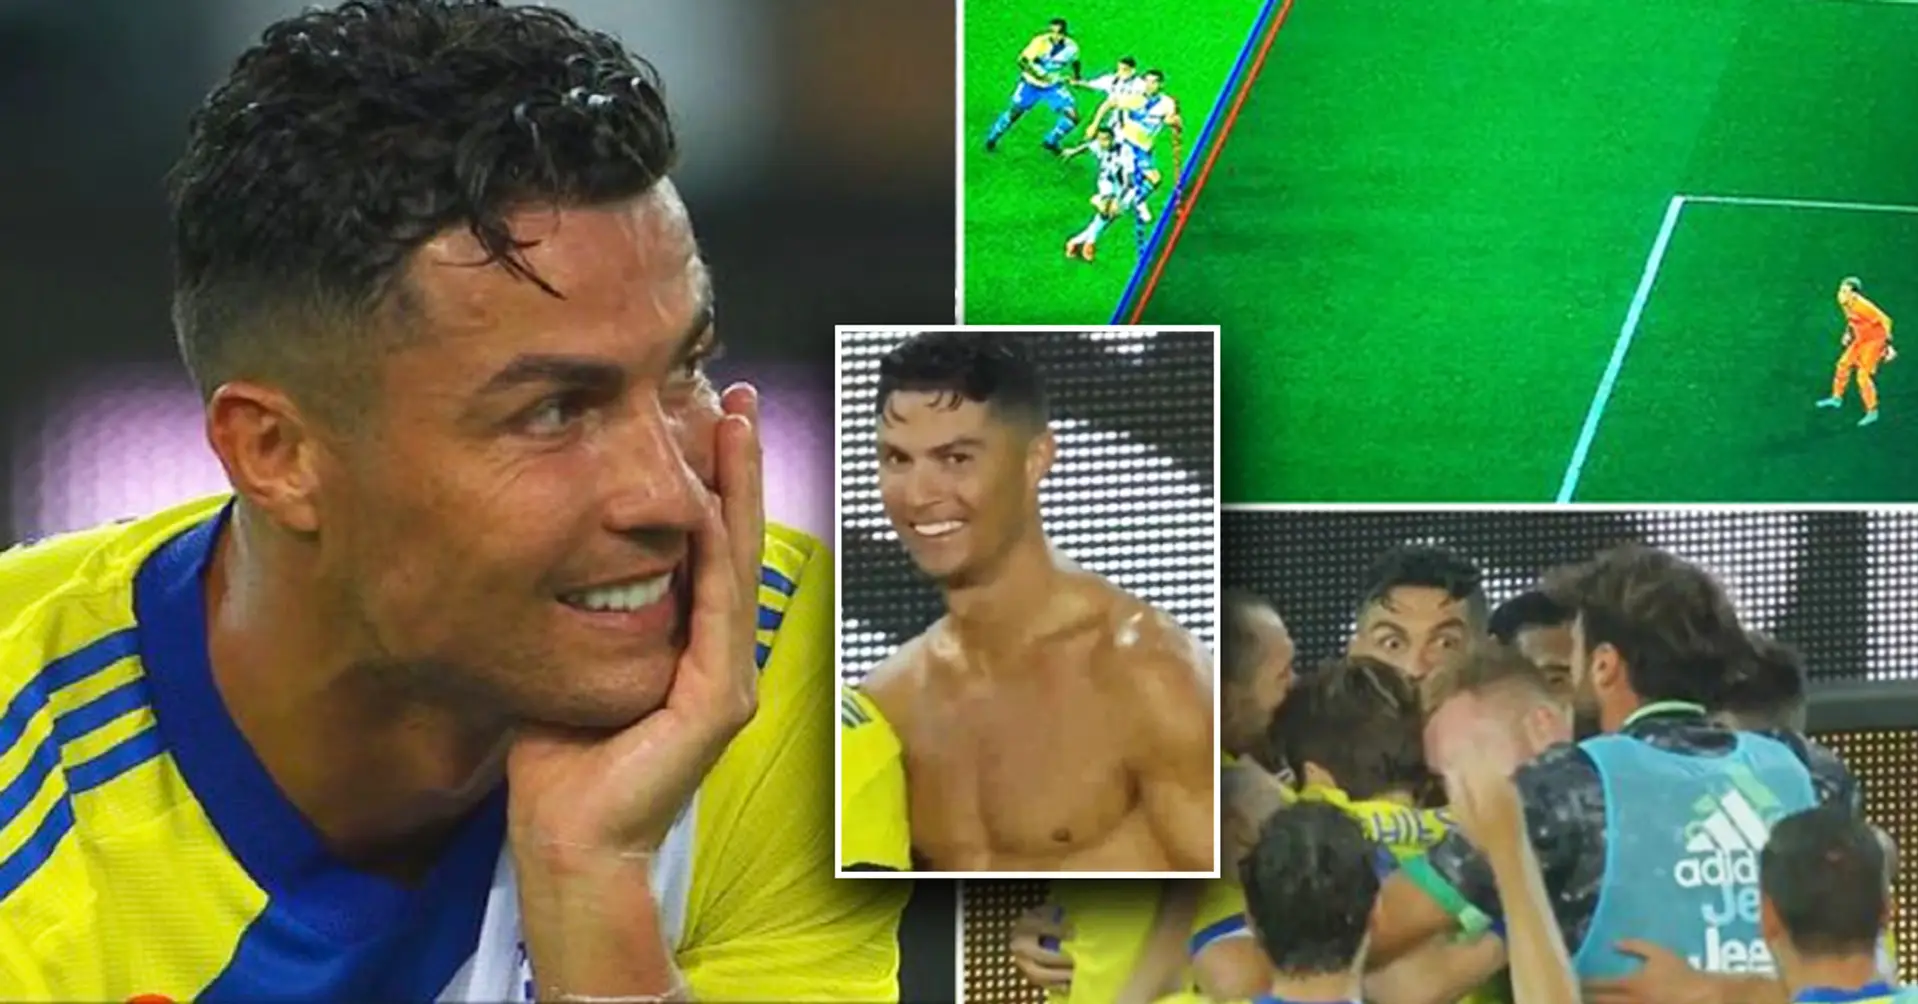 Cristiano Ronaldo took shirt off to celebrate goal, got yellow card, then goal was disallowed